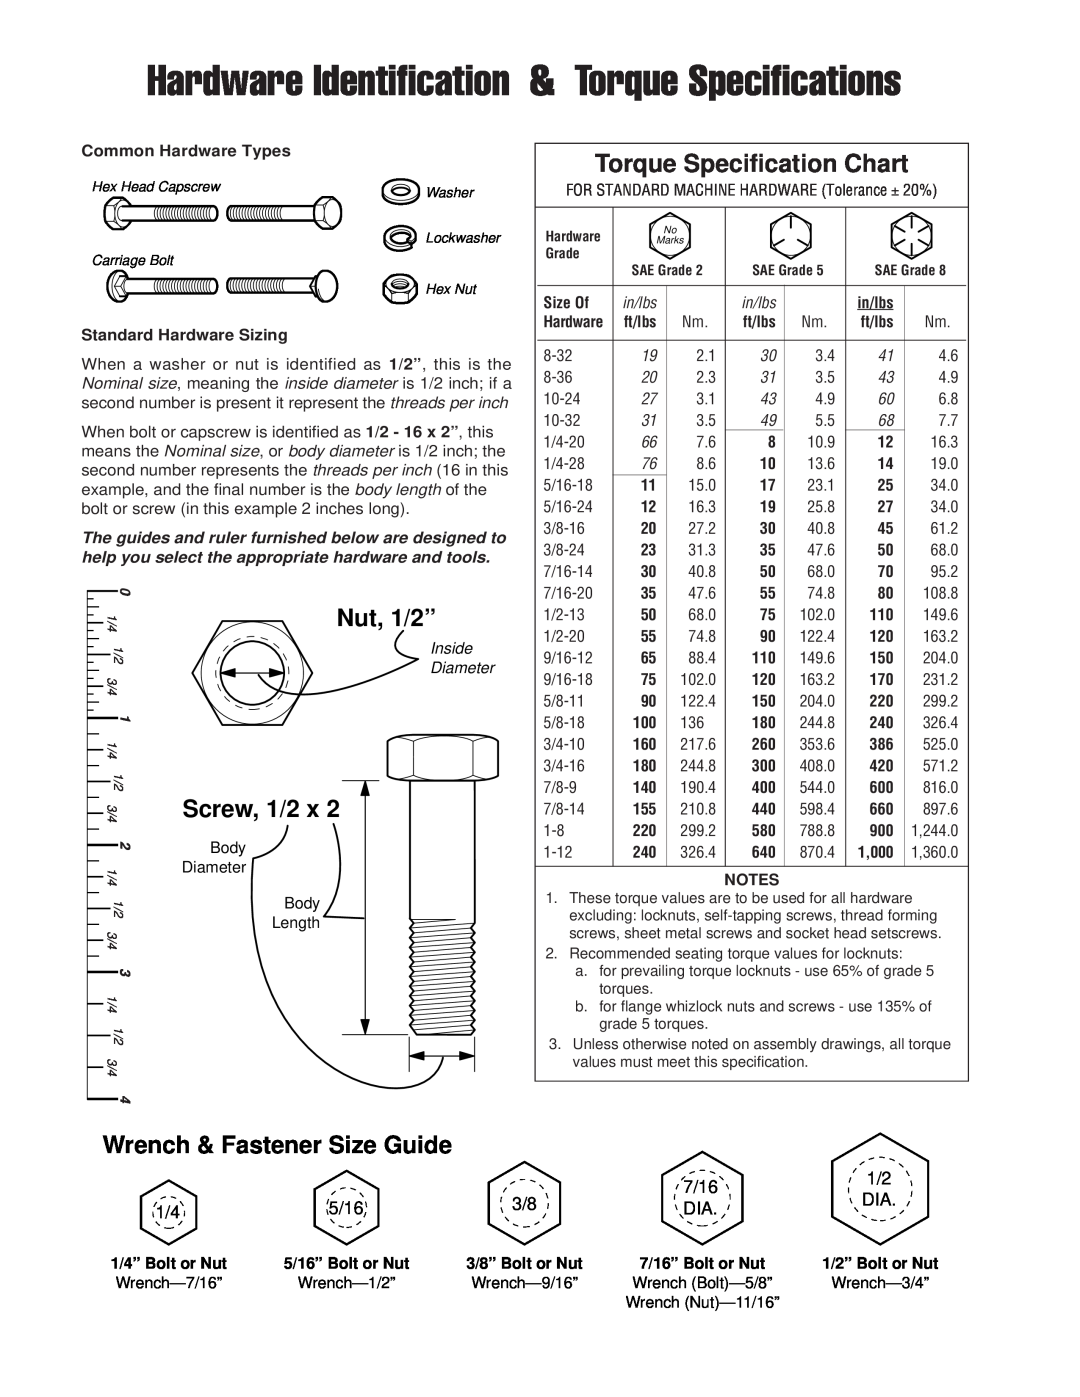 Snapper 2623 manual Hardware Identification & Torque Specifications, Torque Specification Chart, Nut, 1/2”, Screw, 1/2 